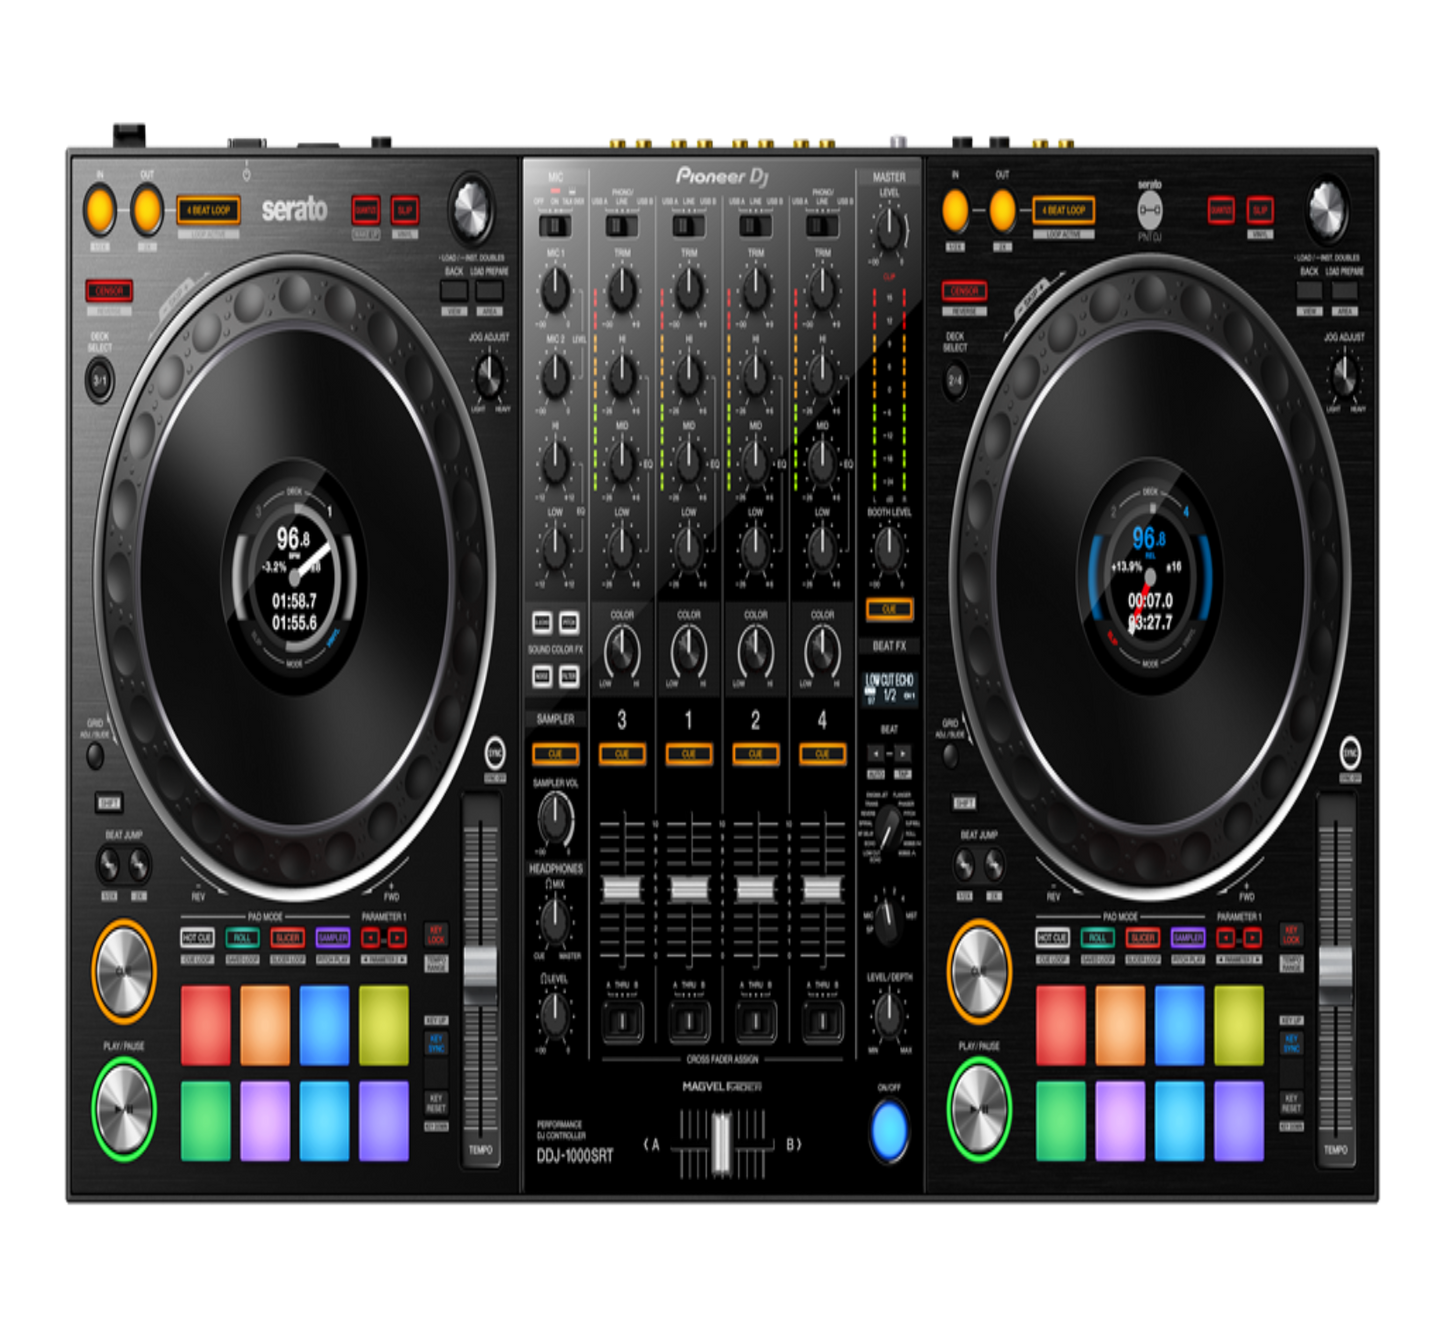 PIONEER DJ DDJ-1000SRT